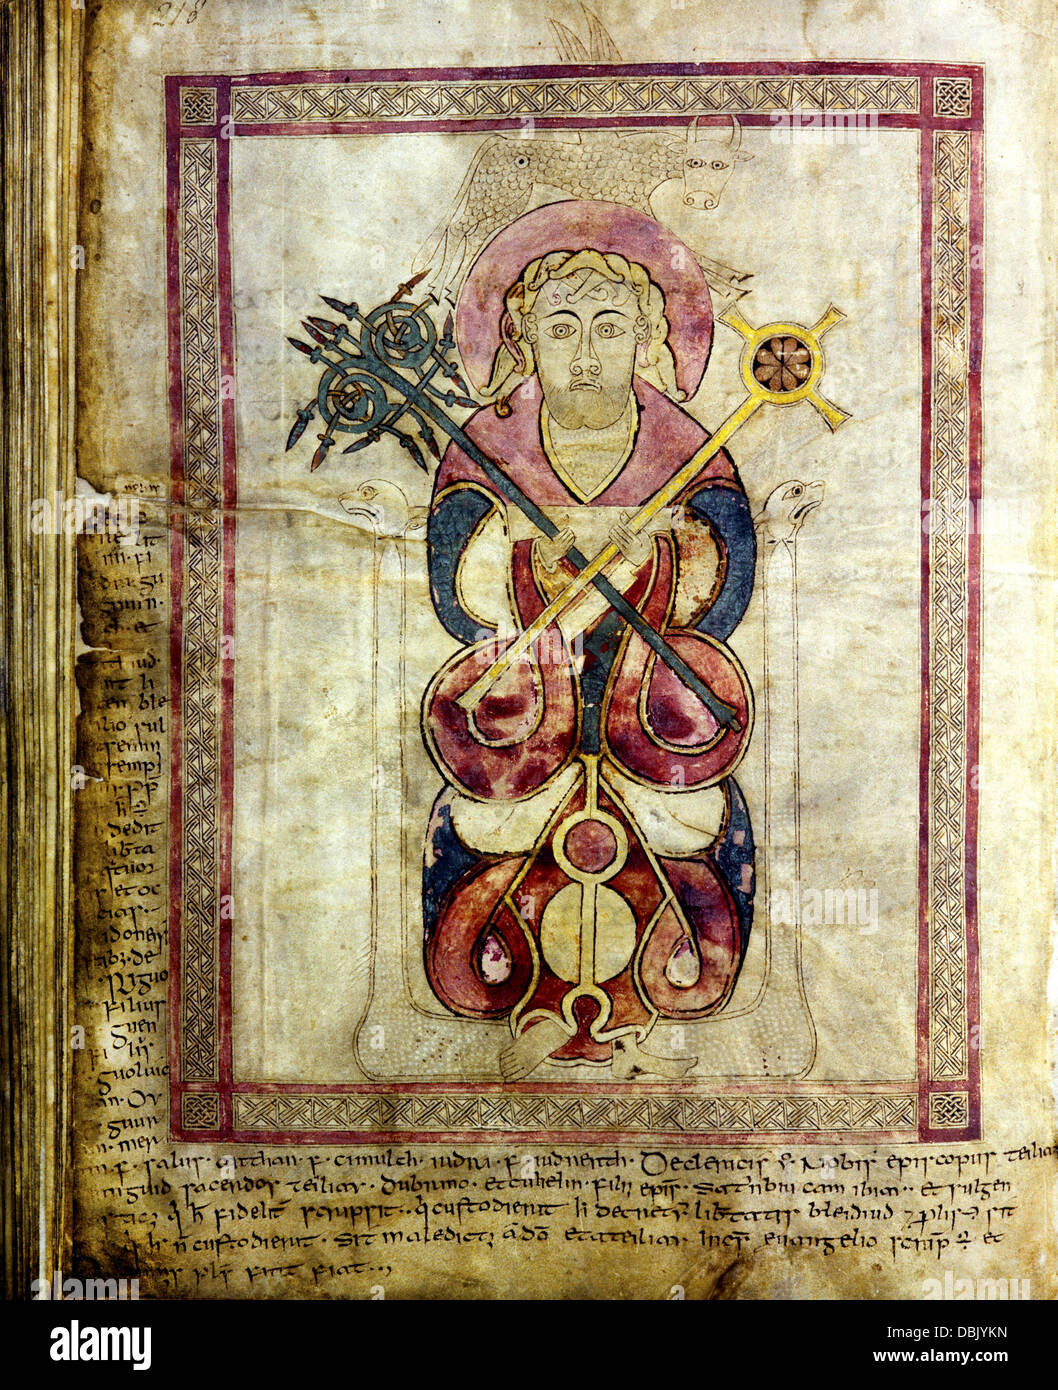 Lichfield vangeli, o St Chad vangeli, pagina 218, il Luca 'miniature" pagina che introduce il Vangelo di san Luca Foto Stock